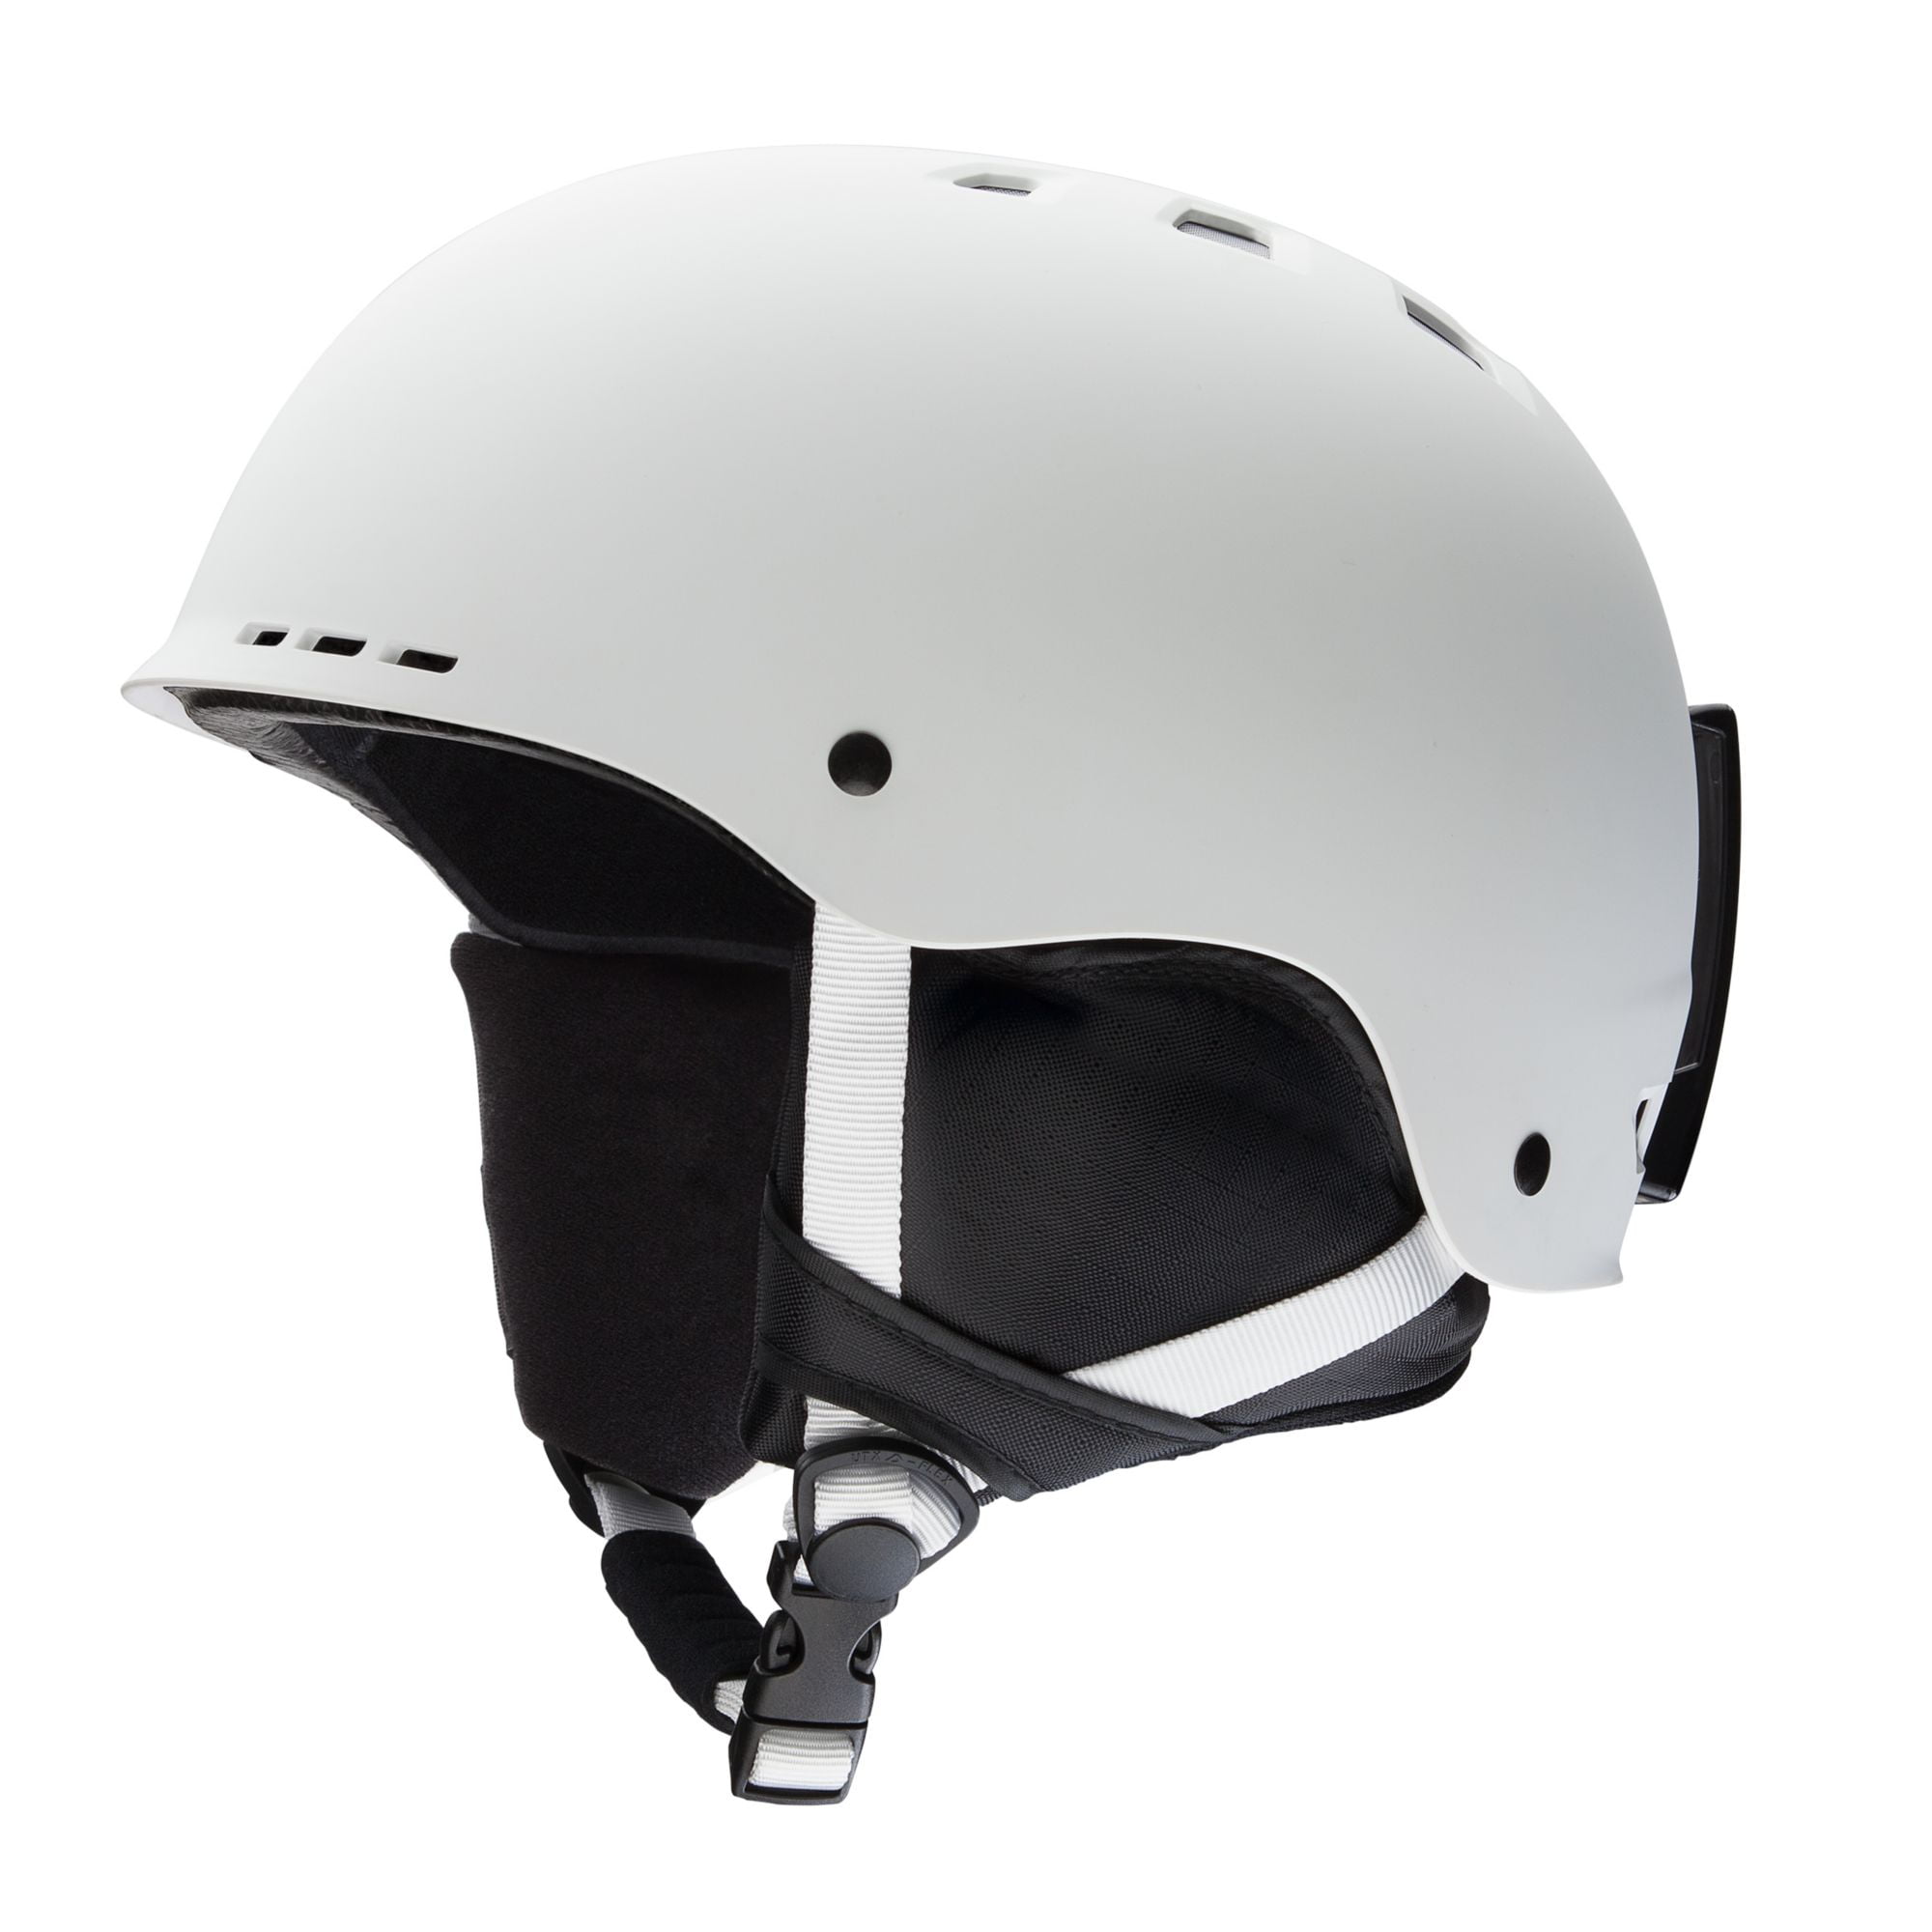 Size 63-67 Smith Holt 2 Men's Outdoor Ski Helmet available in Matte Black 